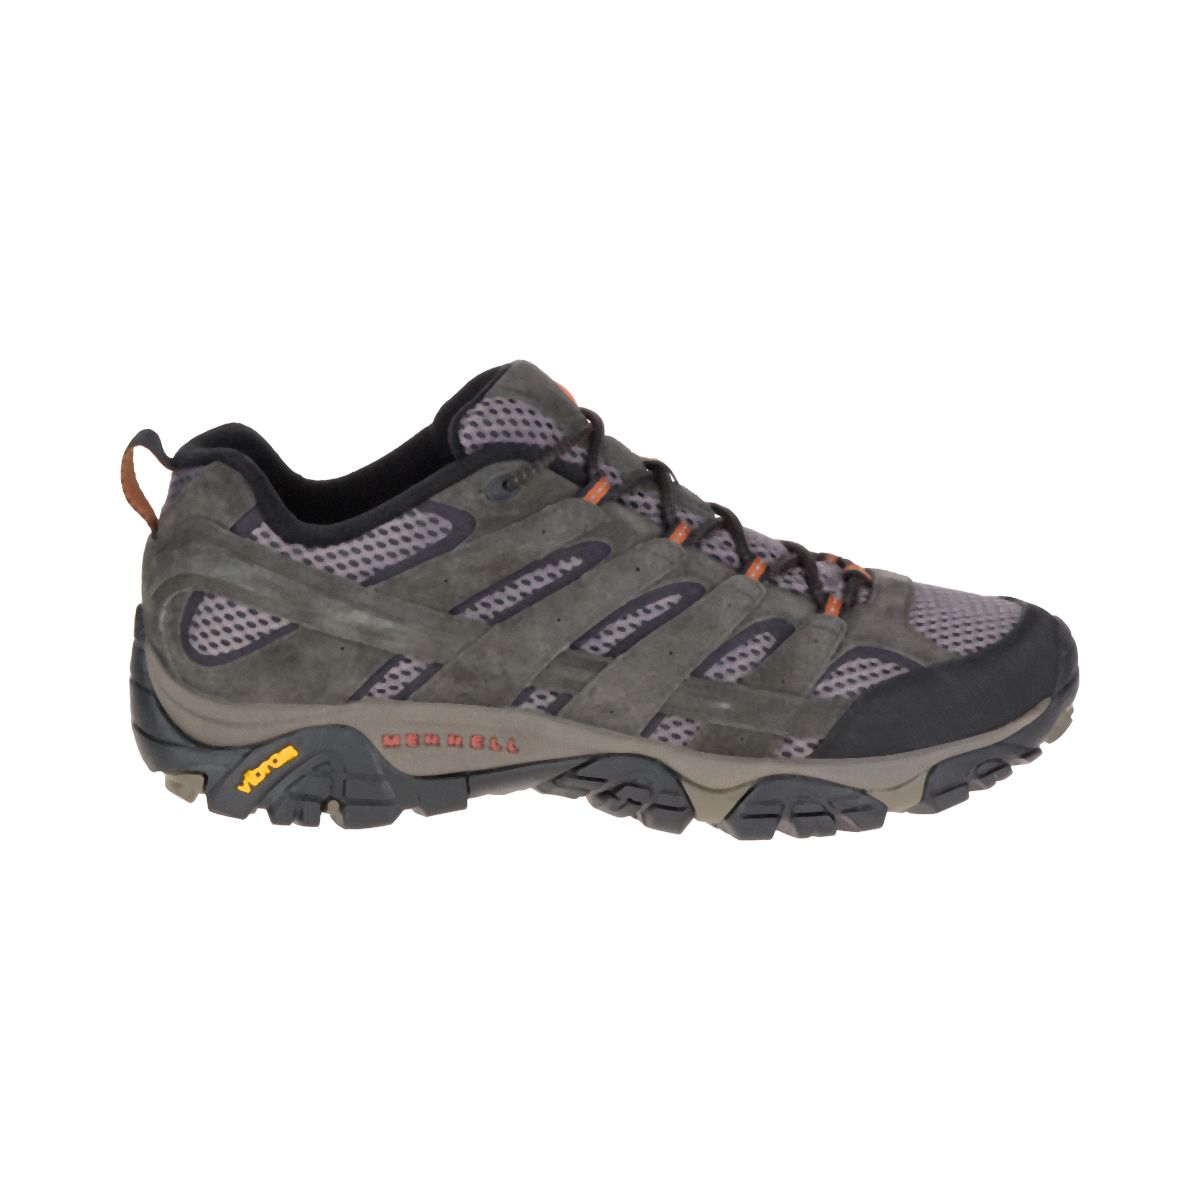 Merrell Men's Moab 2 Vent Hiking Shoes | SportChek